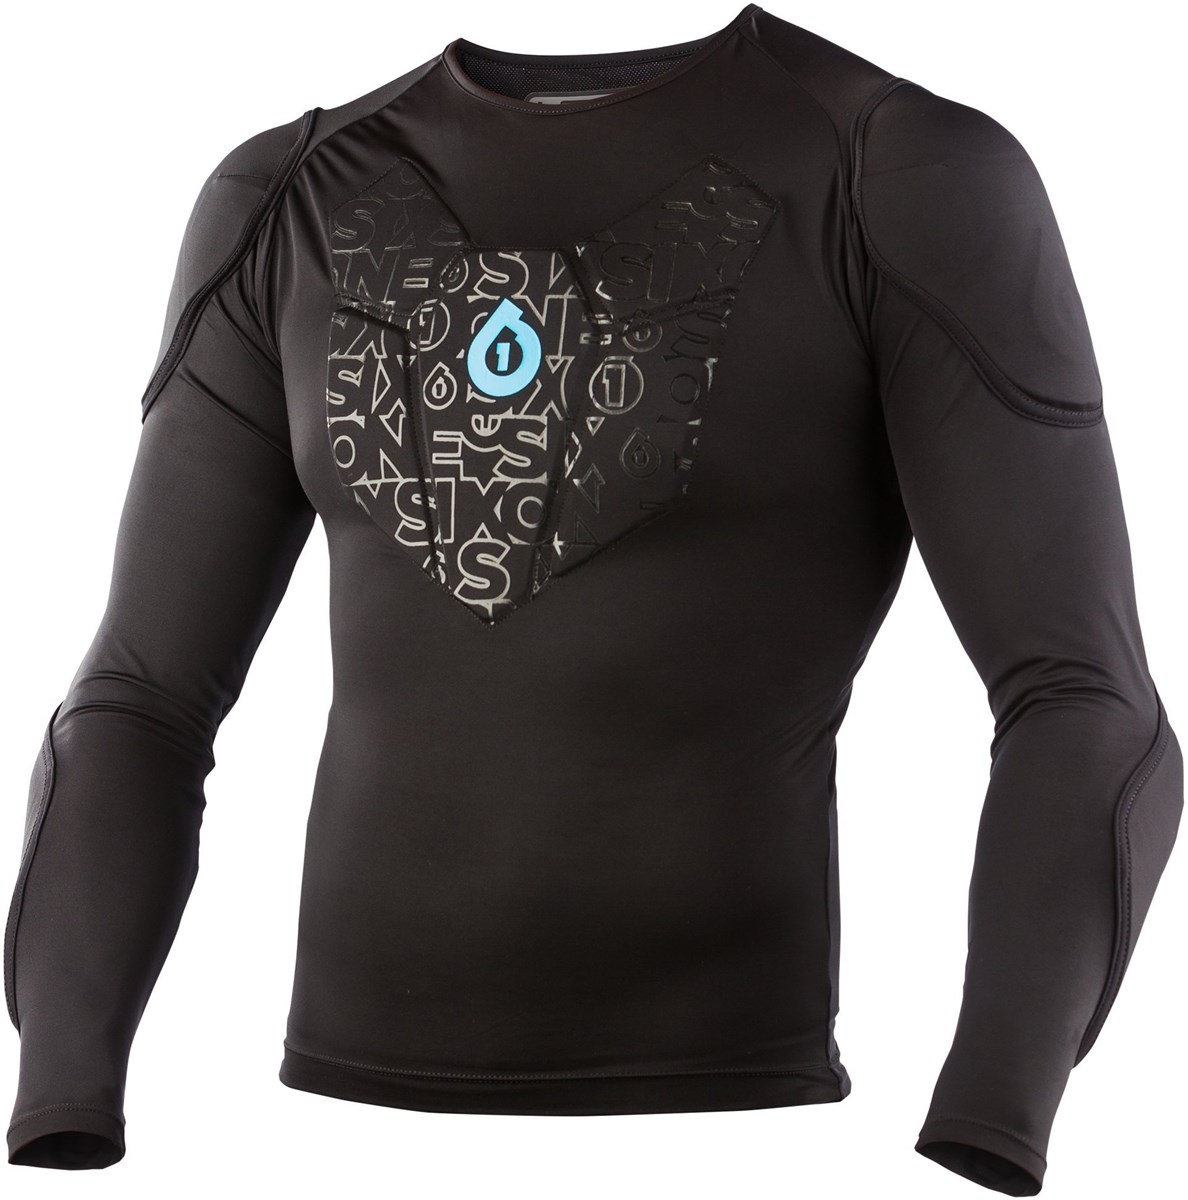 SixSixOne 661 Sub Gear Long Sleeve Shirt - Body Armour product image